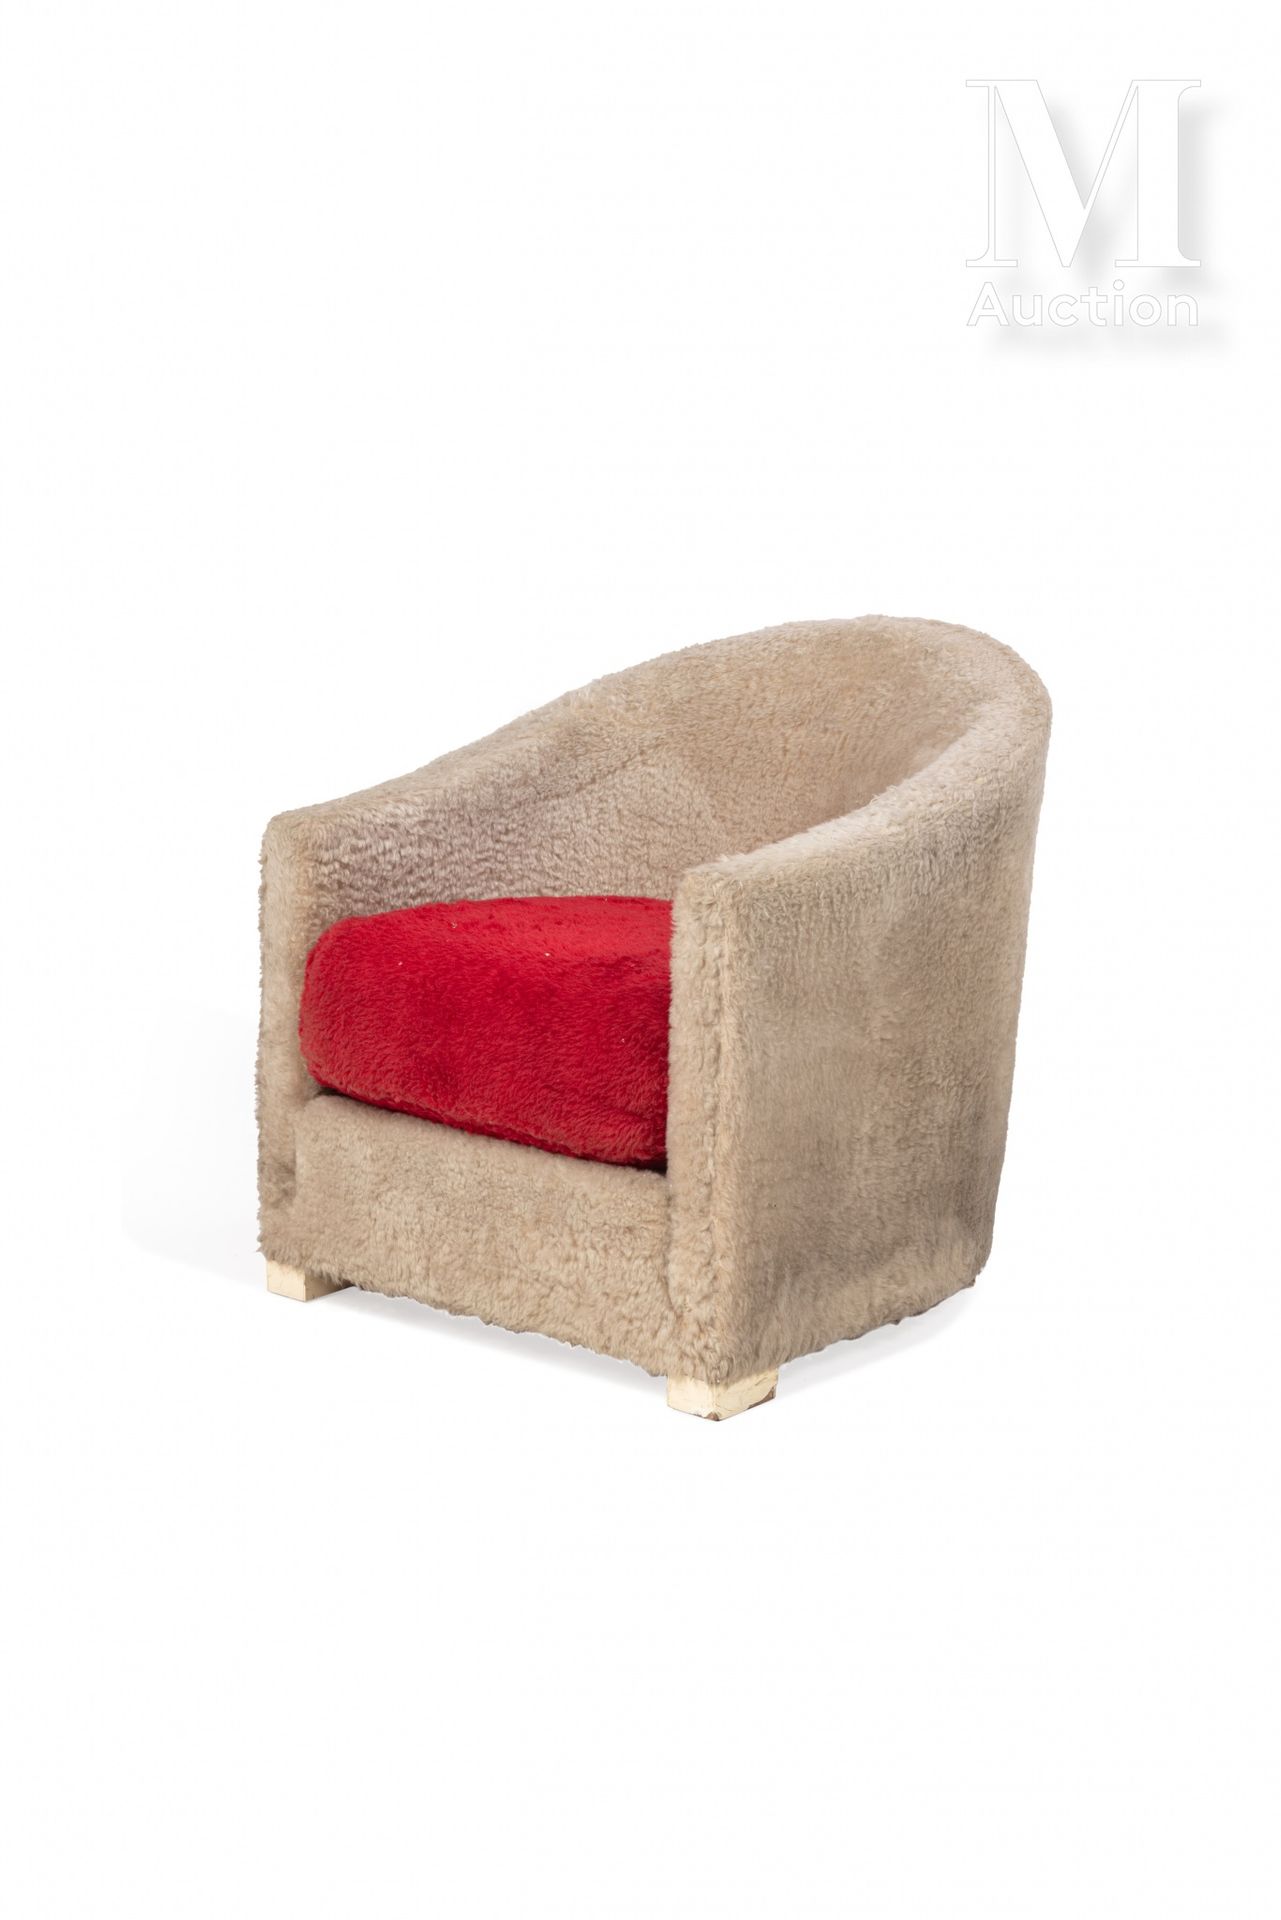 TRAVAIL ART DECO Arbeit im Art Déco-Stil

Korbförmiger Sessel mit Holzgestell, d&hellip;